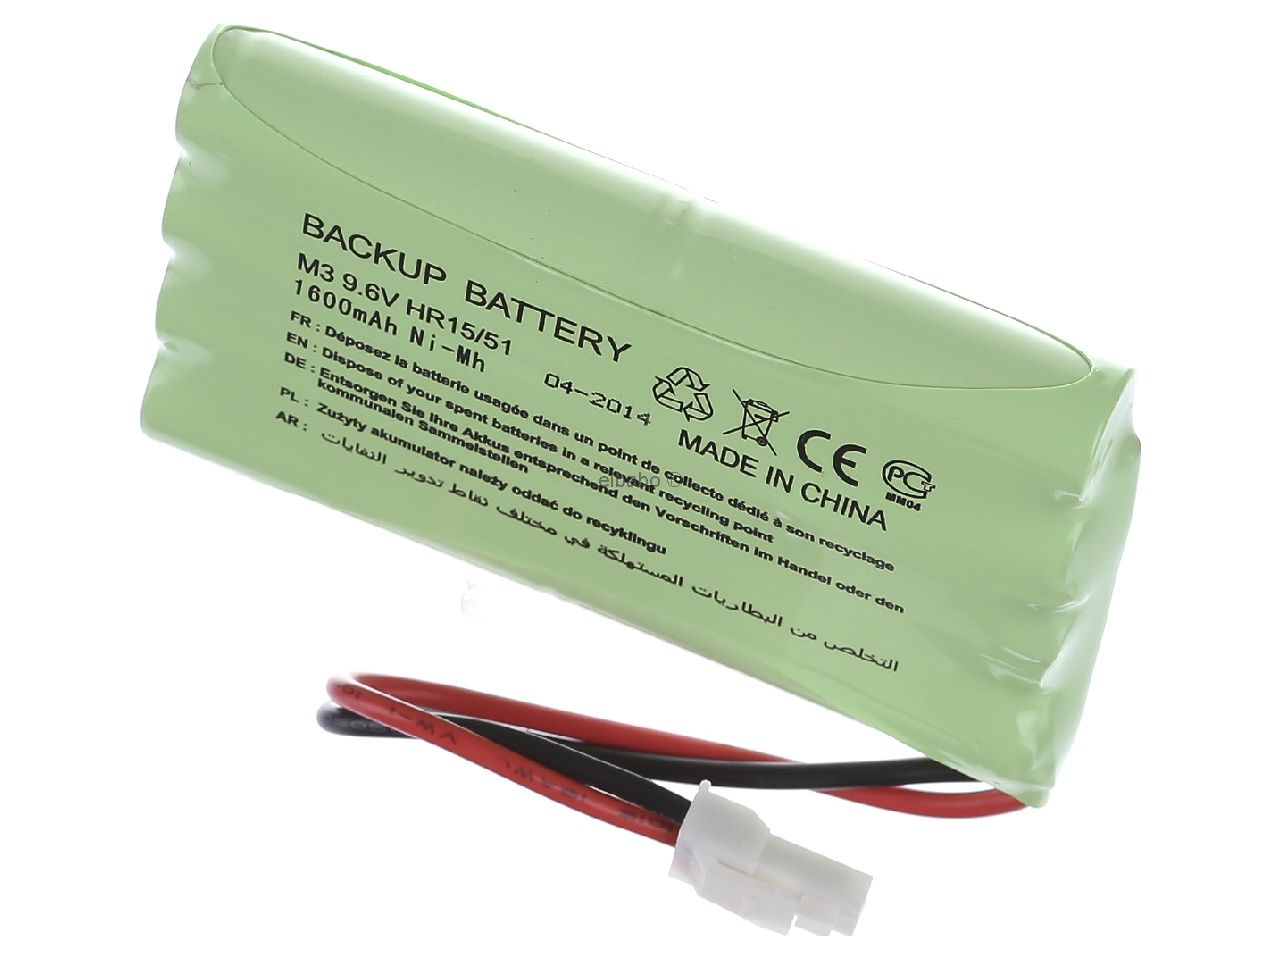 SOMFY -  Batteria tampone per emergenza - note BATTERIA DI BACKUP 9.6V 1600MAH